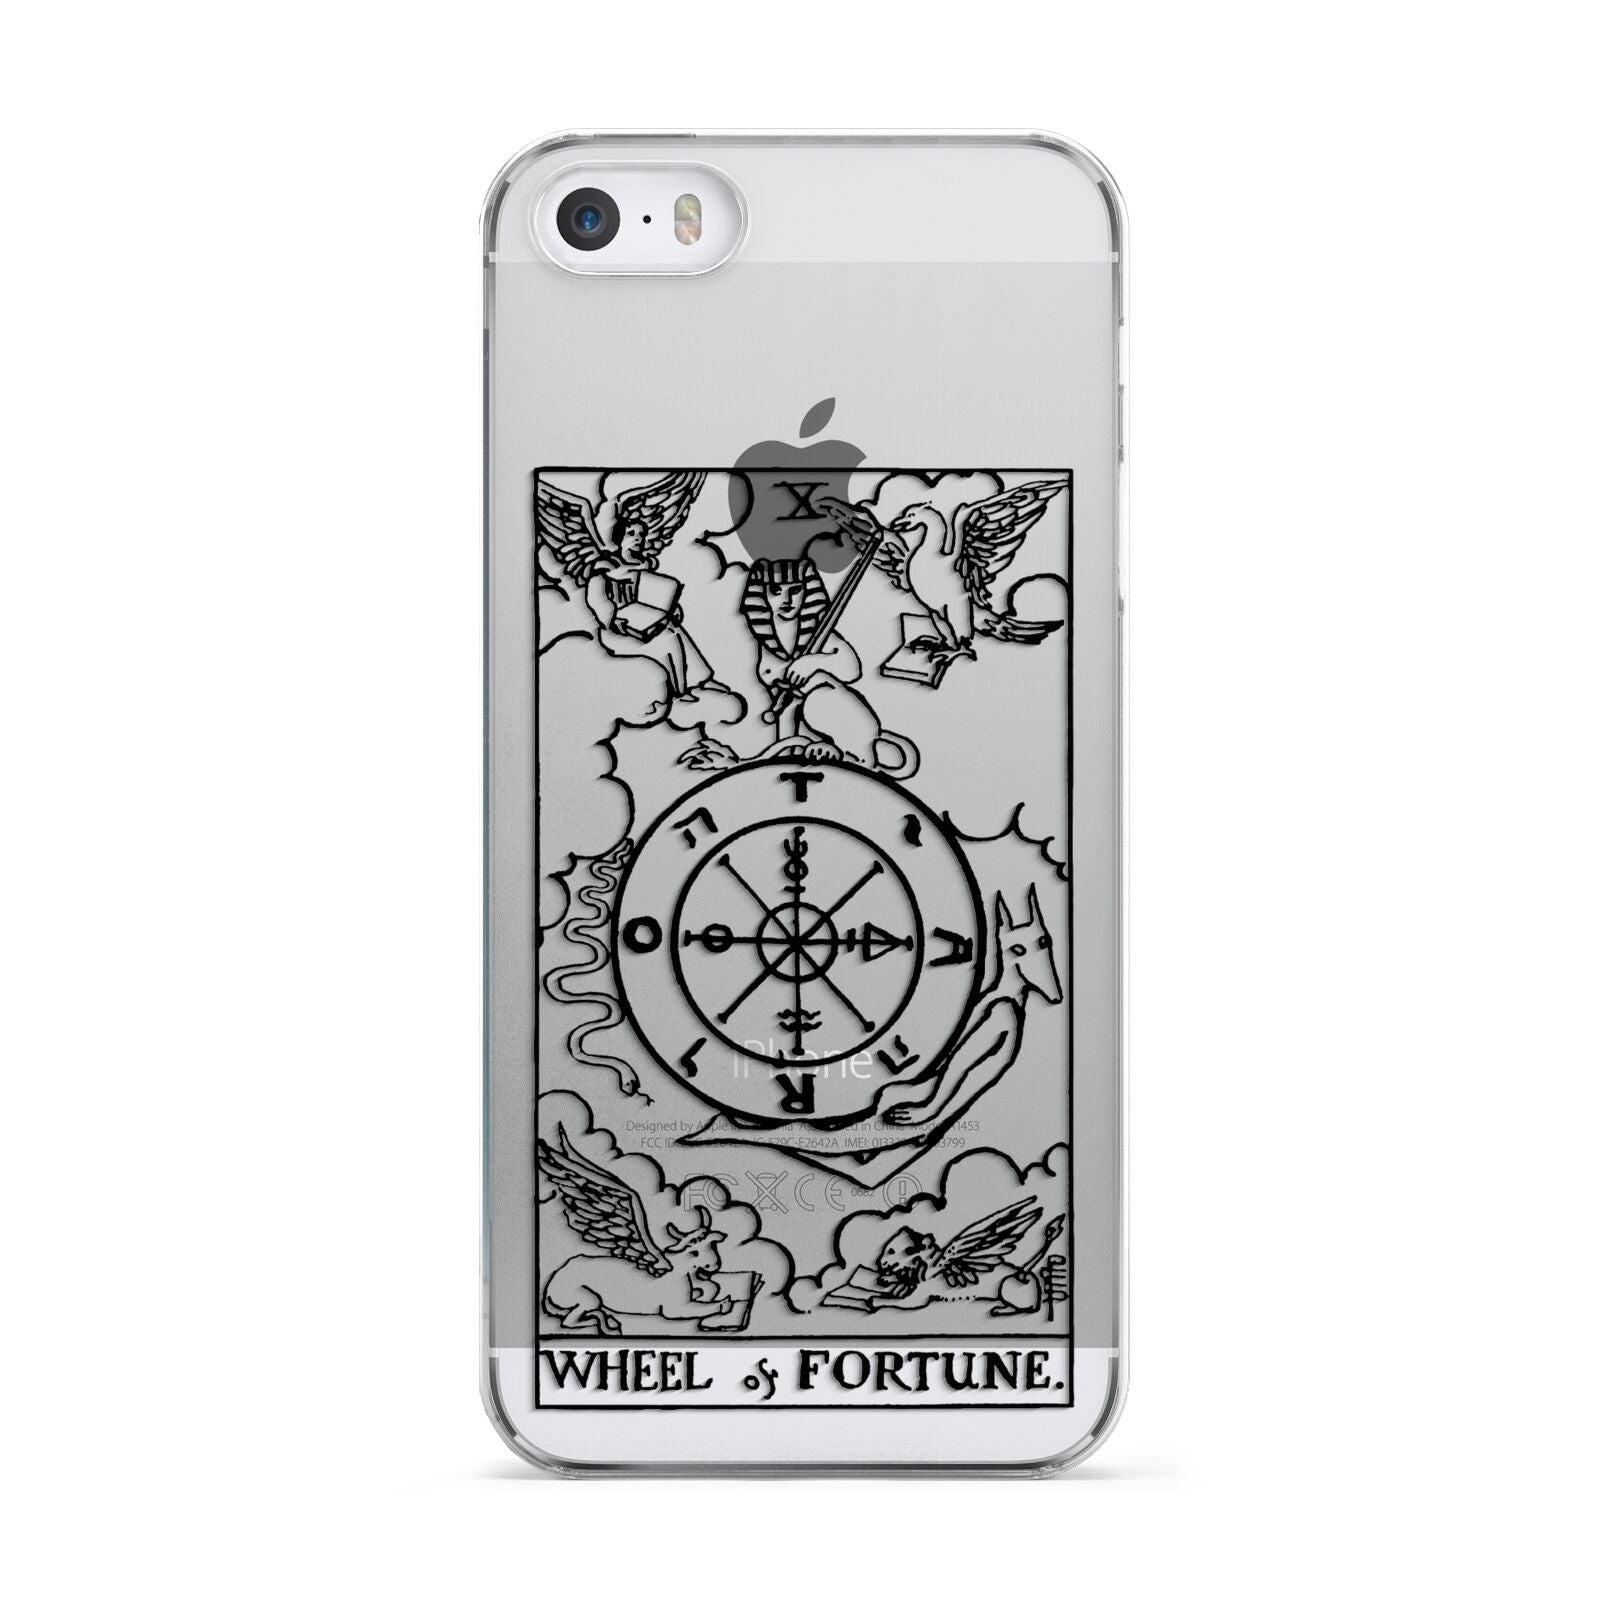 Wheel of Fortune Monochrome Tarot Card Apple iPhone 5 Case